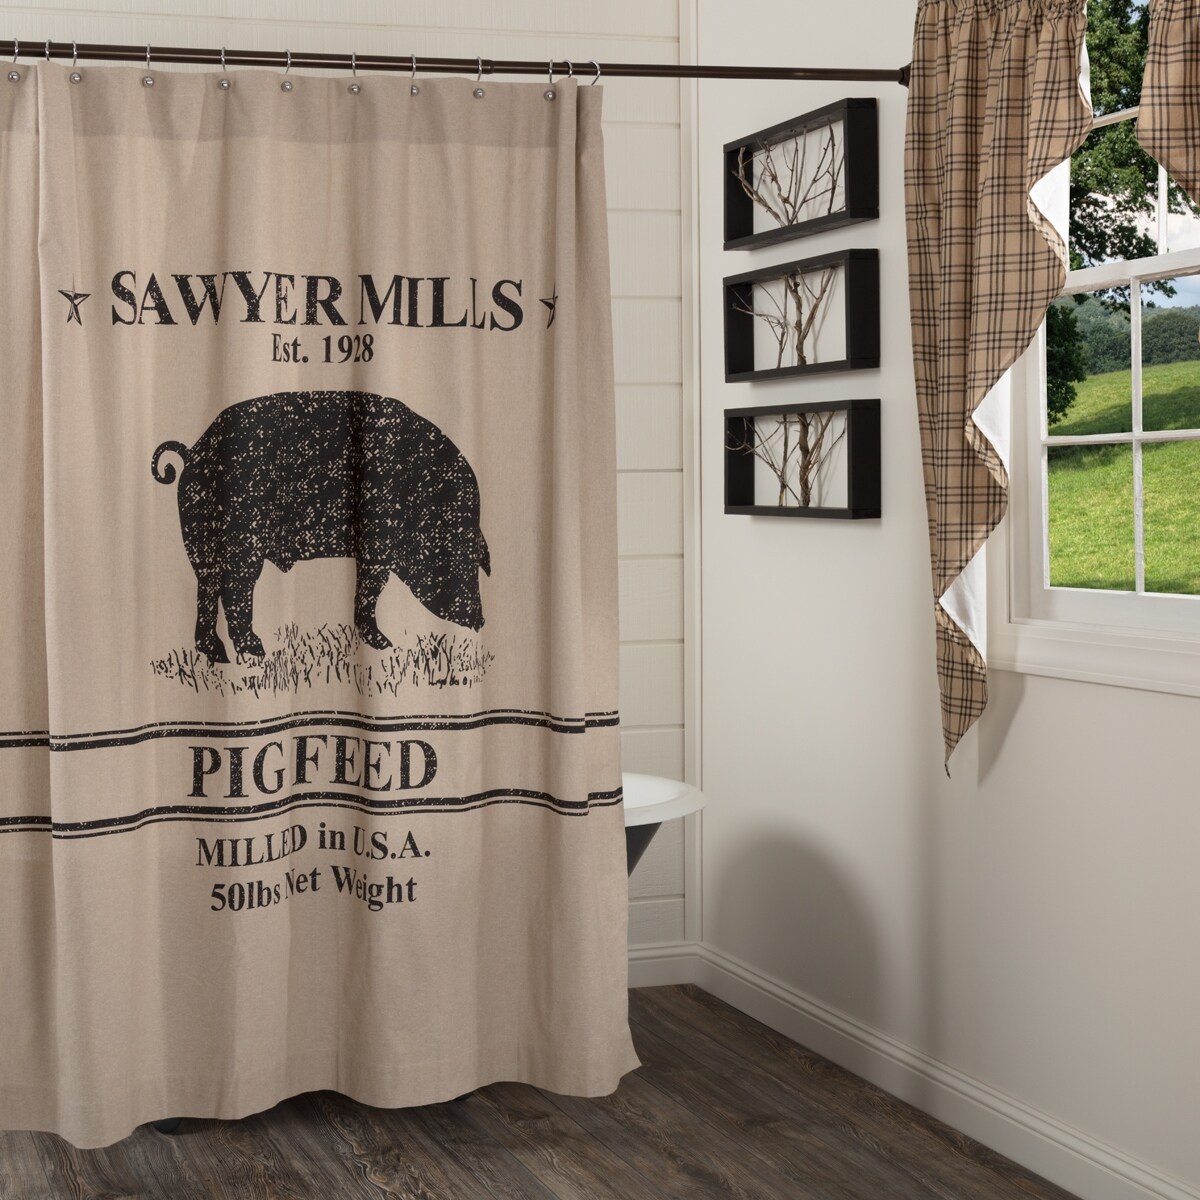 Bathroom Waterproof Fabric Shower Curtain Set Striped Two Cute Pig Design 72x72" 